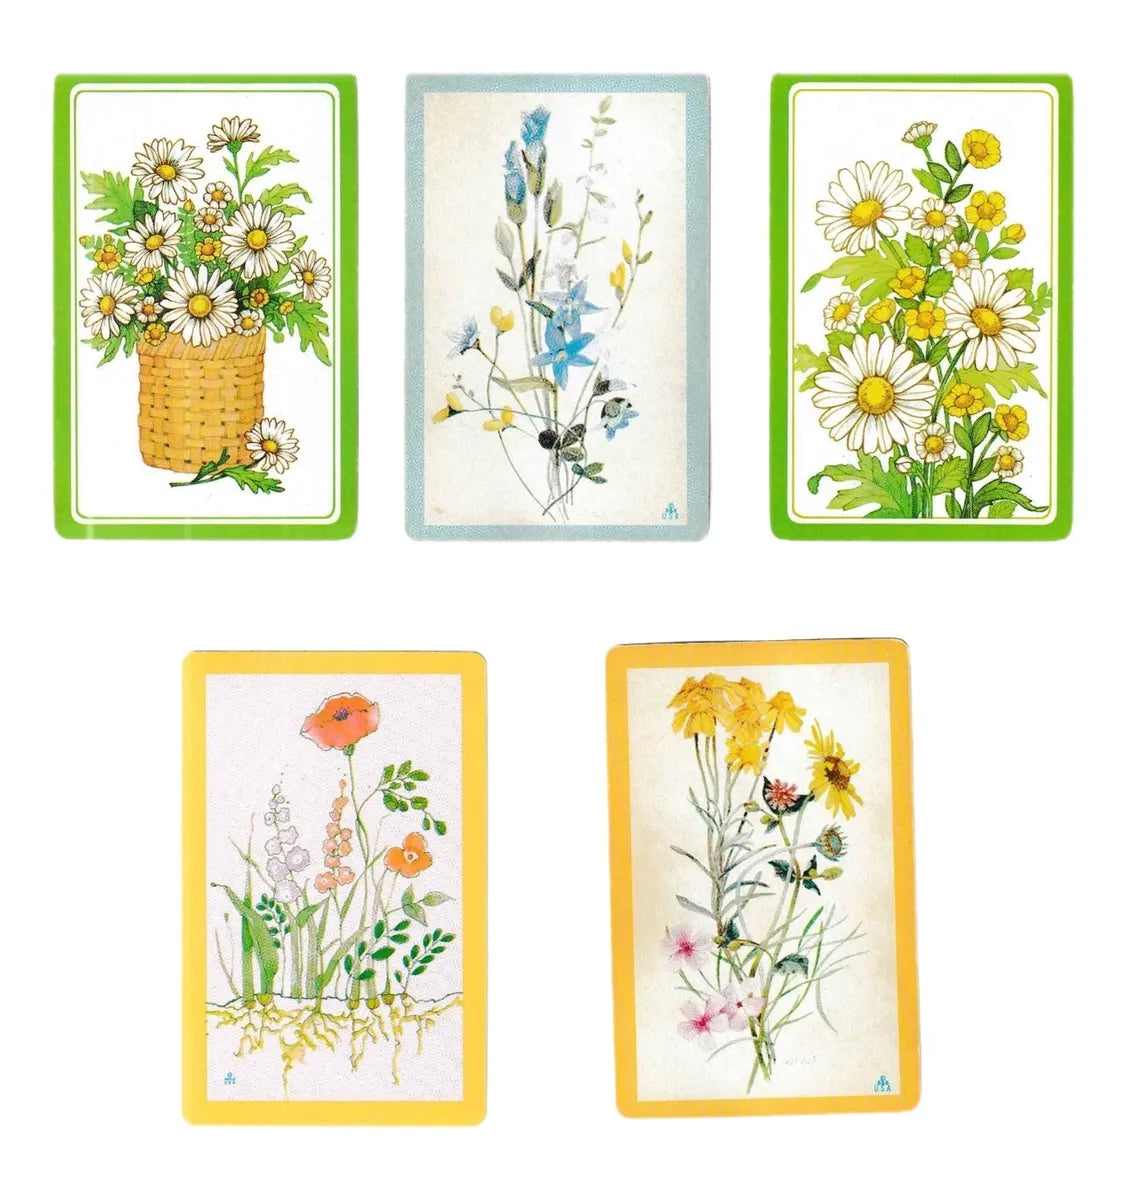 VINTAGE PLAYING CARDS - Set of 10 - Flowers, Floral, Grapes, Mushrooms, Junk Journal, Ephemera, Swap Cards, Craft Supply